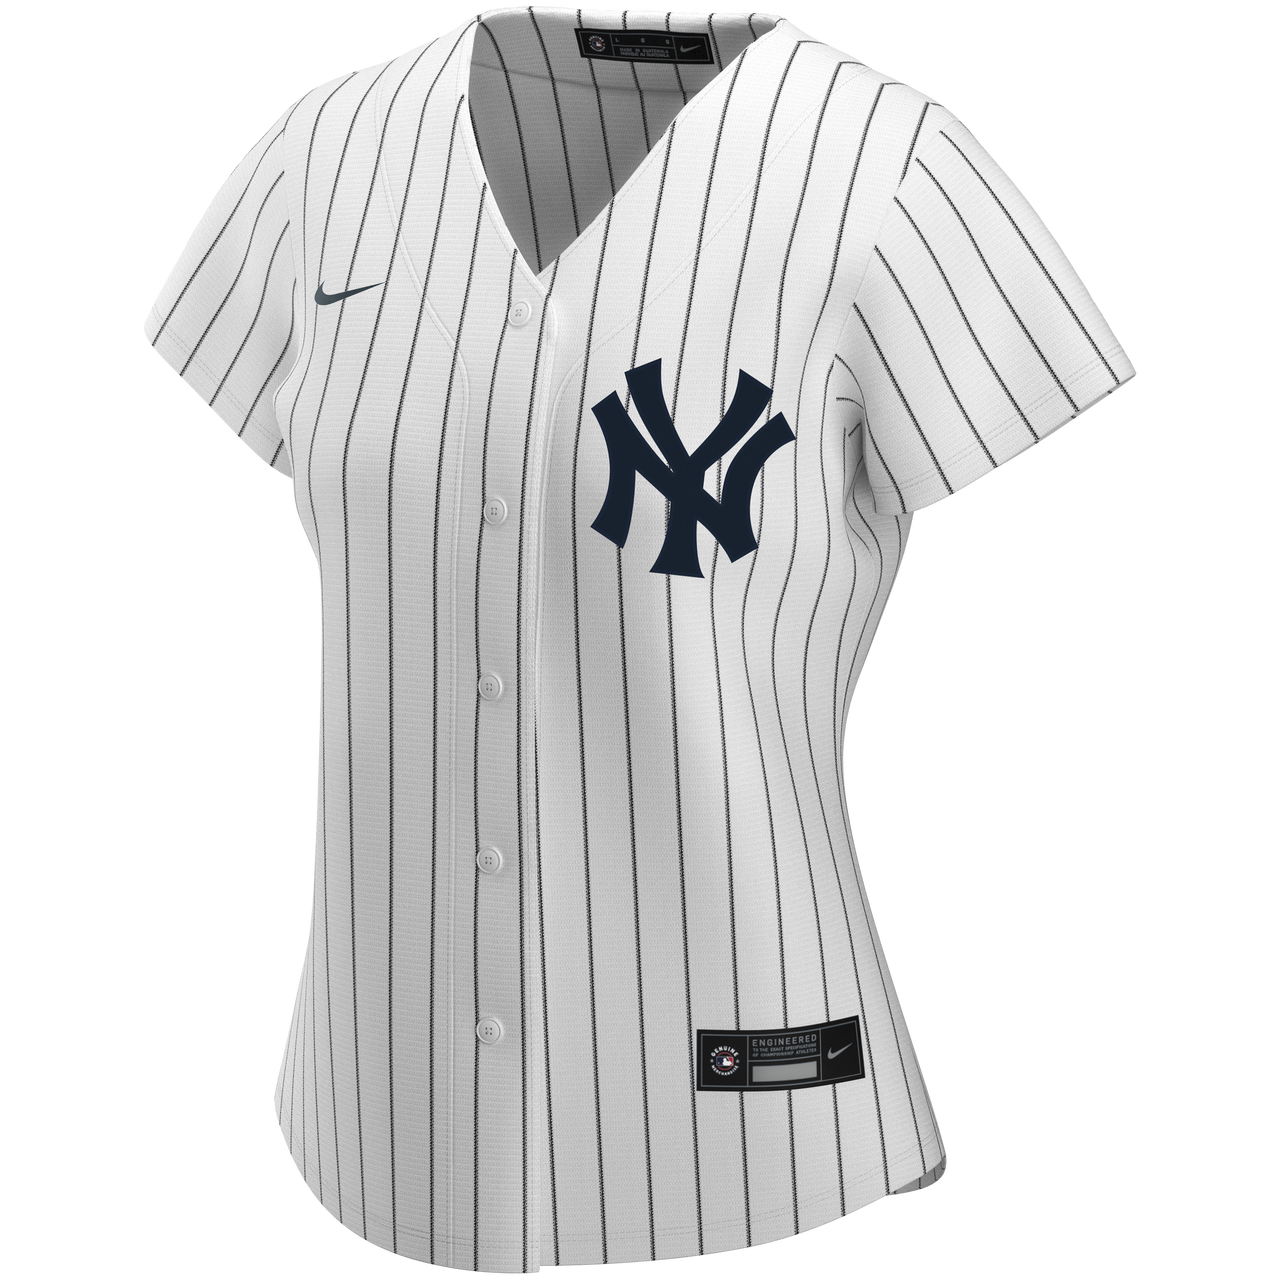 New York Yankees Aaron Judge Women's Majestic Road Gray Cool Base Play